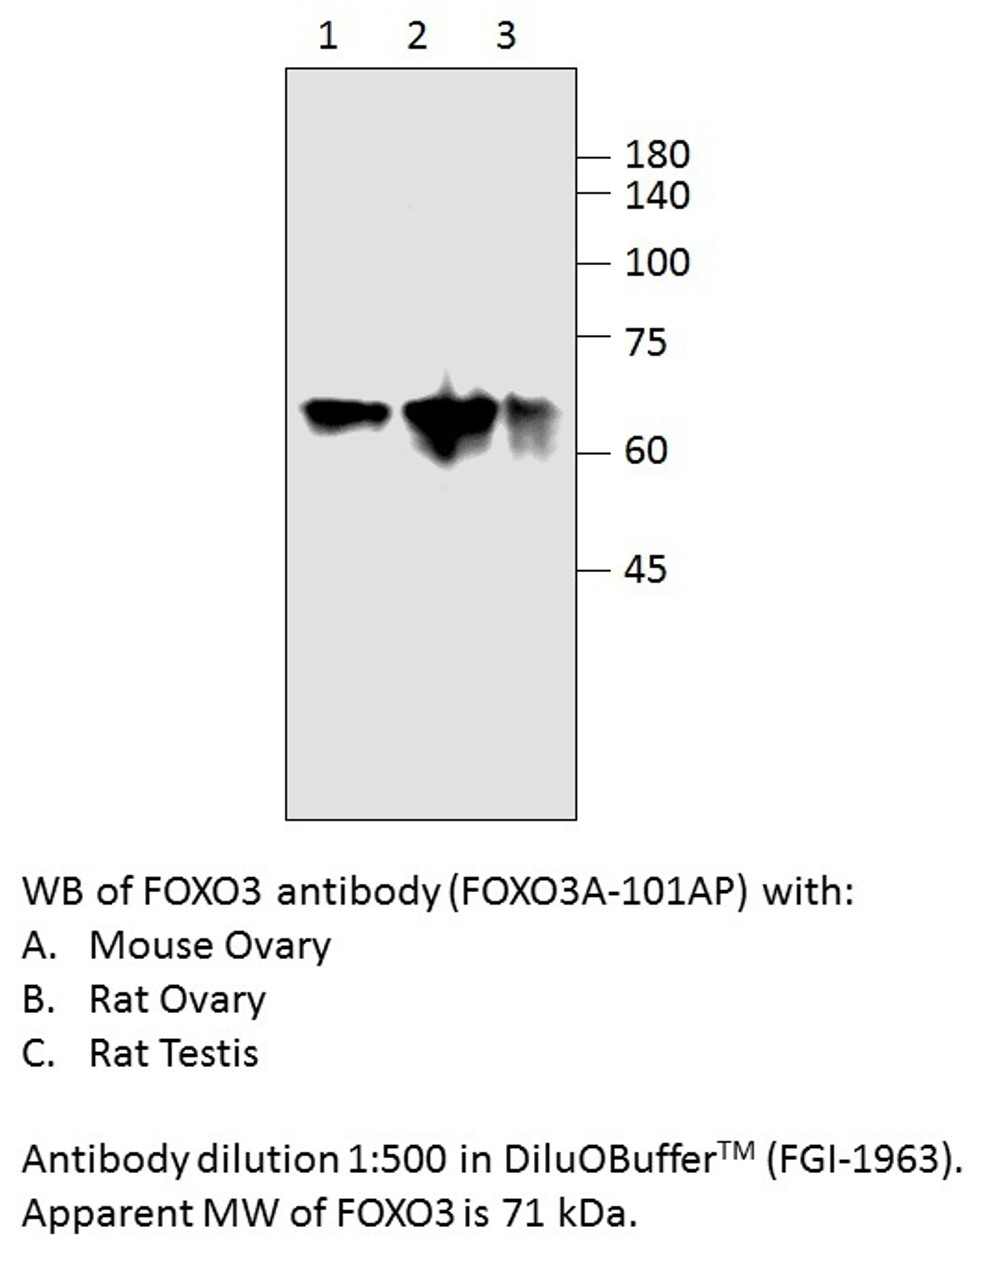 FOXO3A Antibody from Fabgennix